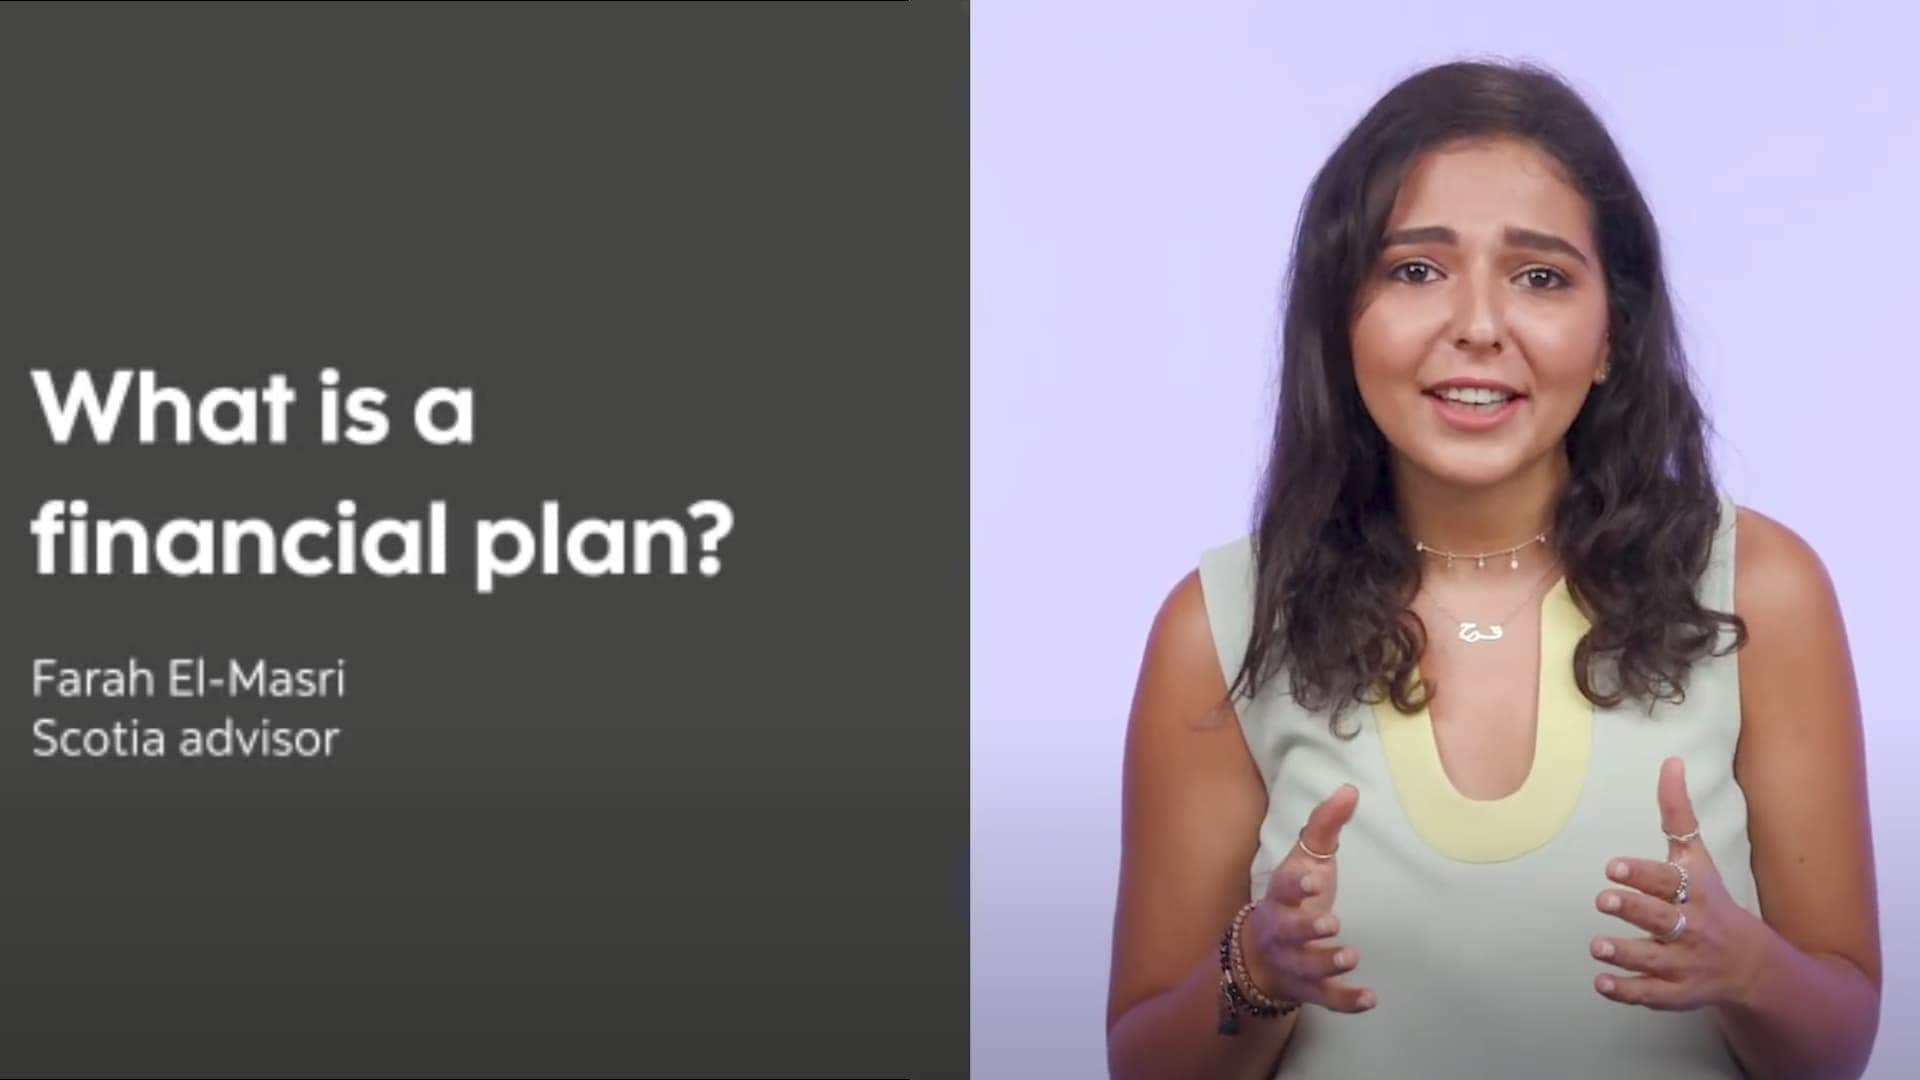 What is a financial plan? Farah El-Masri, Scotia advisor.